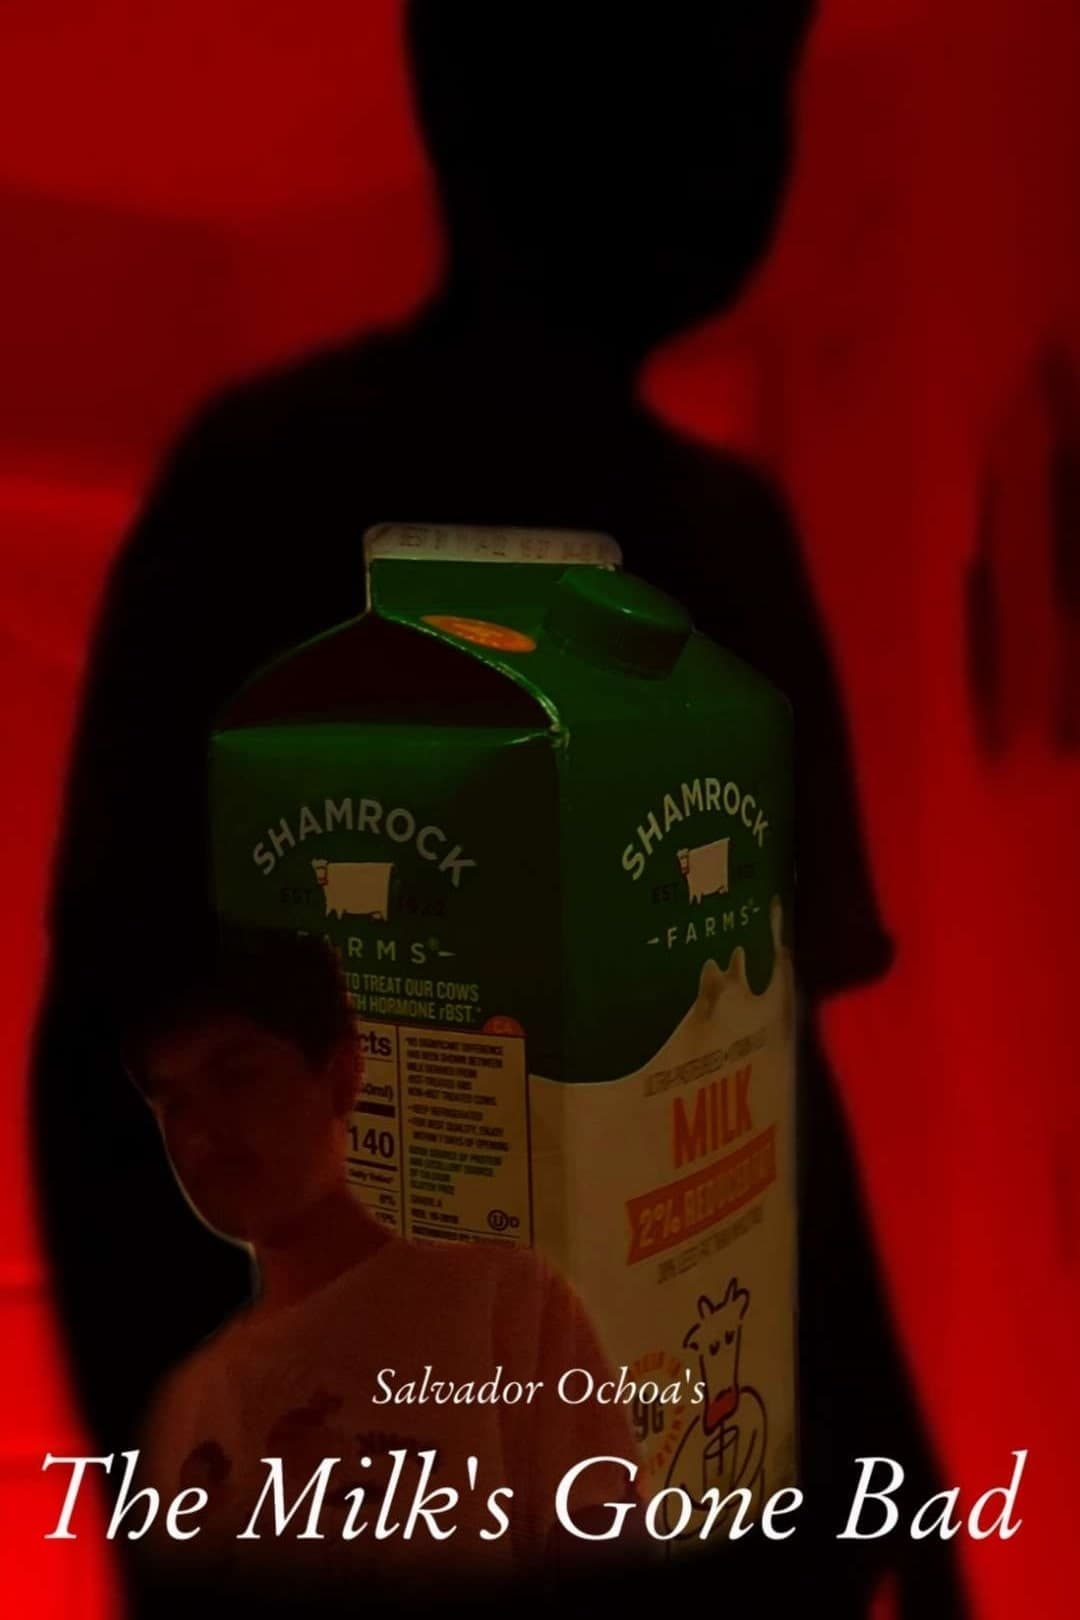 The Milk's Gone Bad